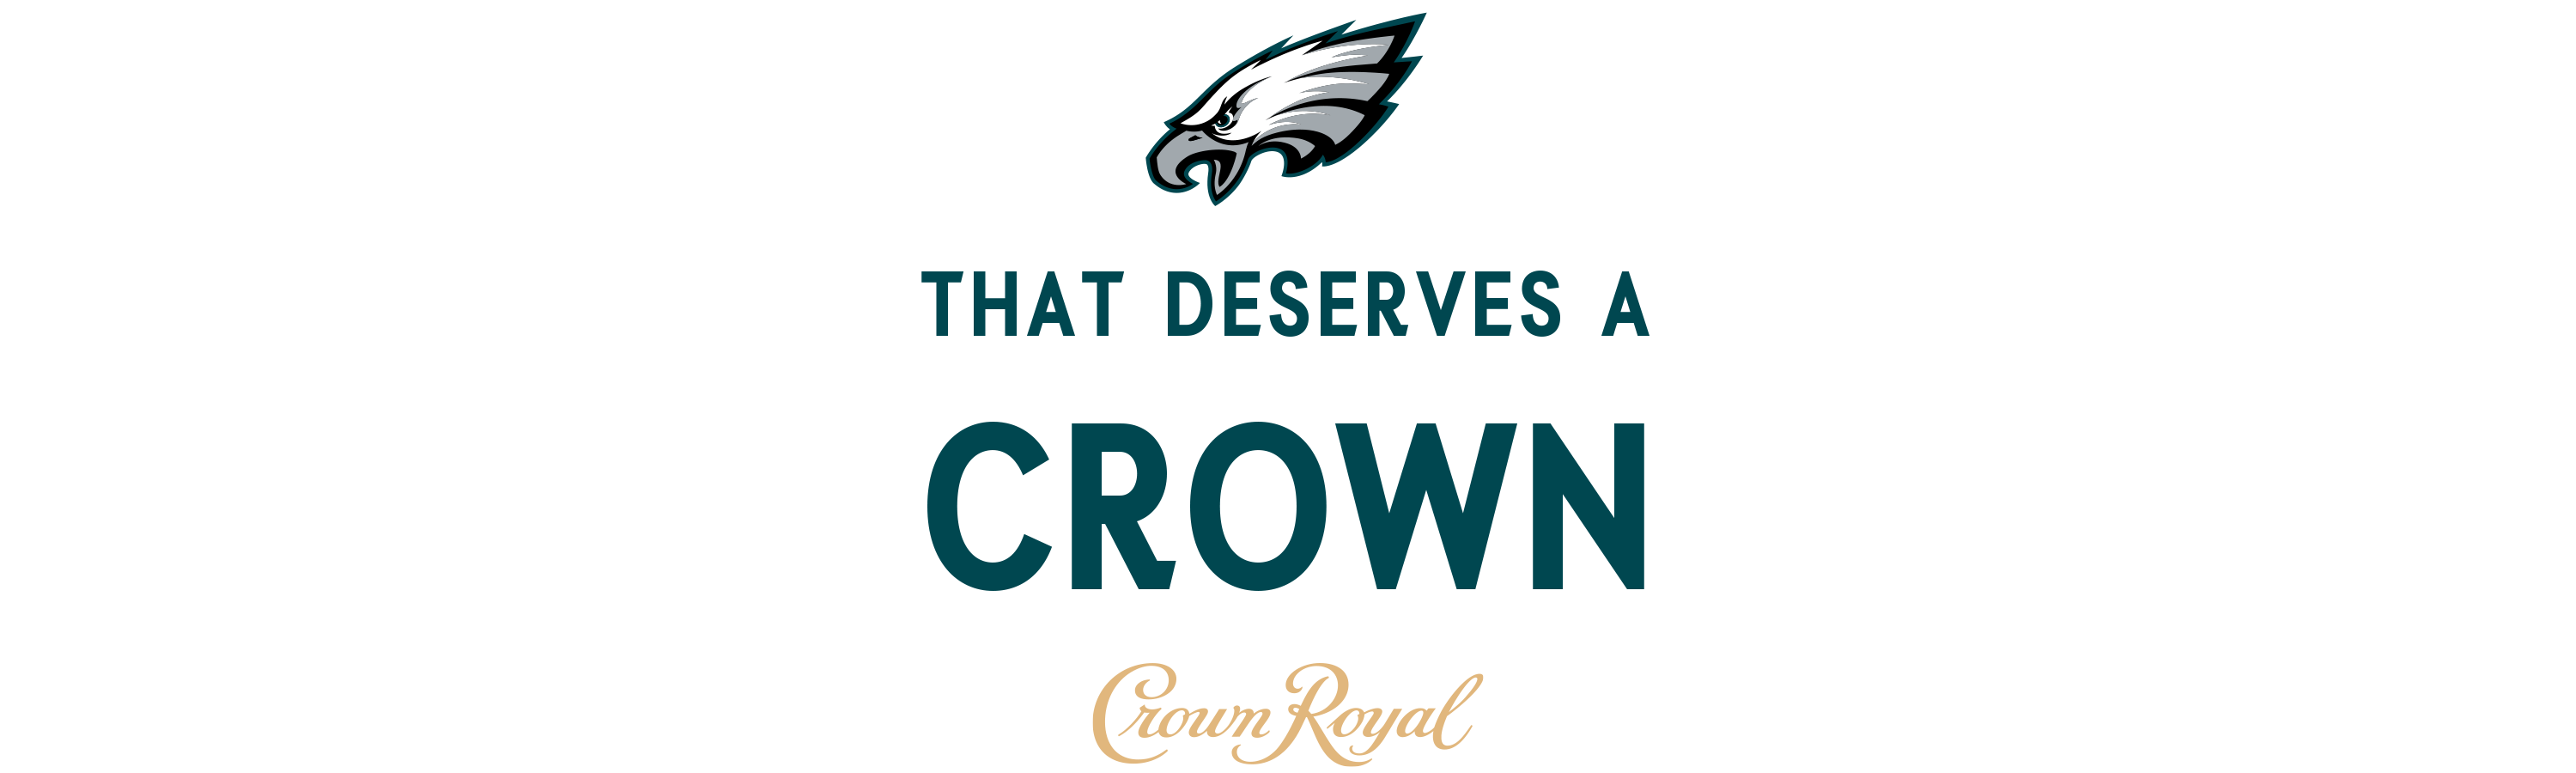 Philadelphia Eagles  Crown Royal - Deserves a Crown